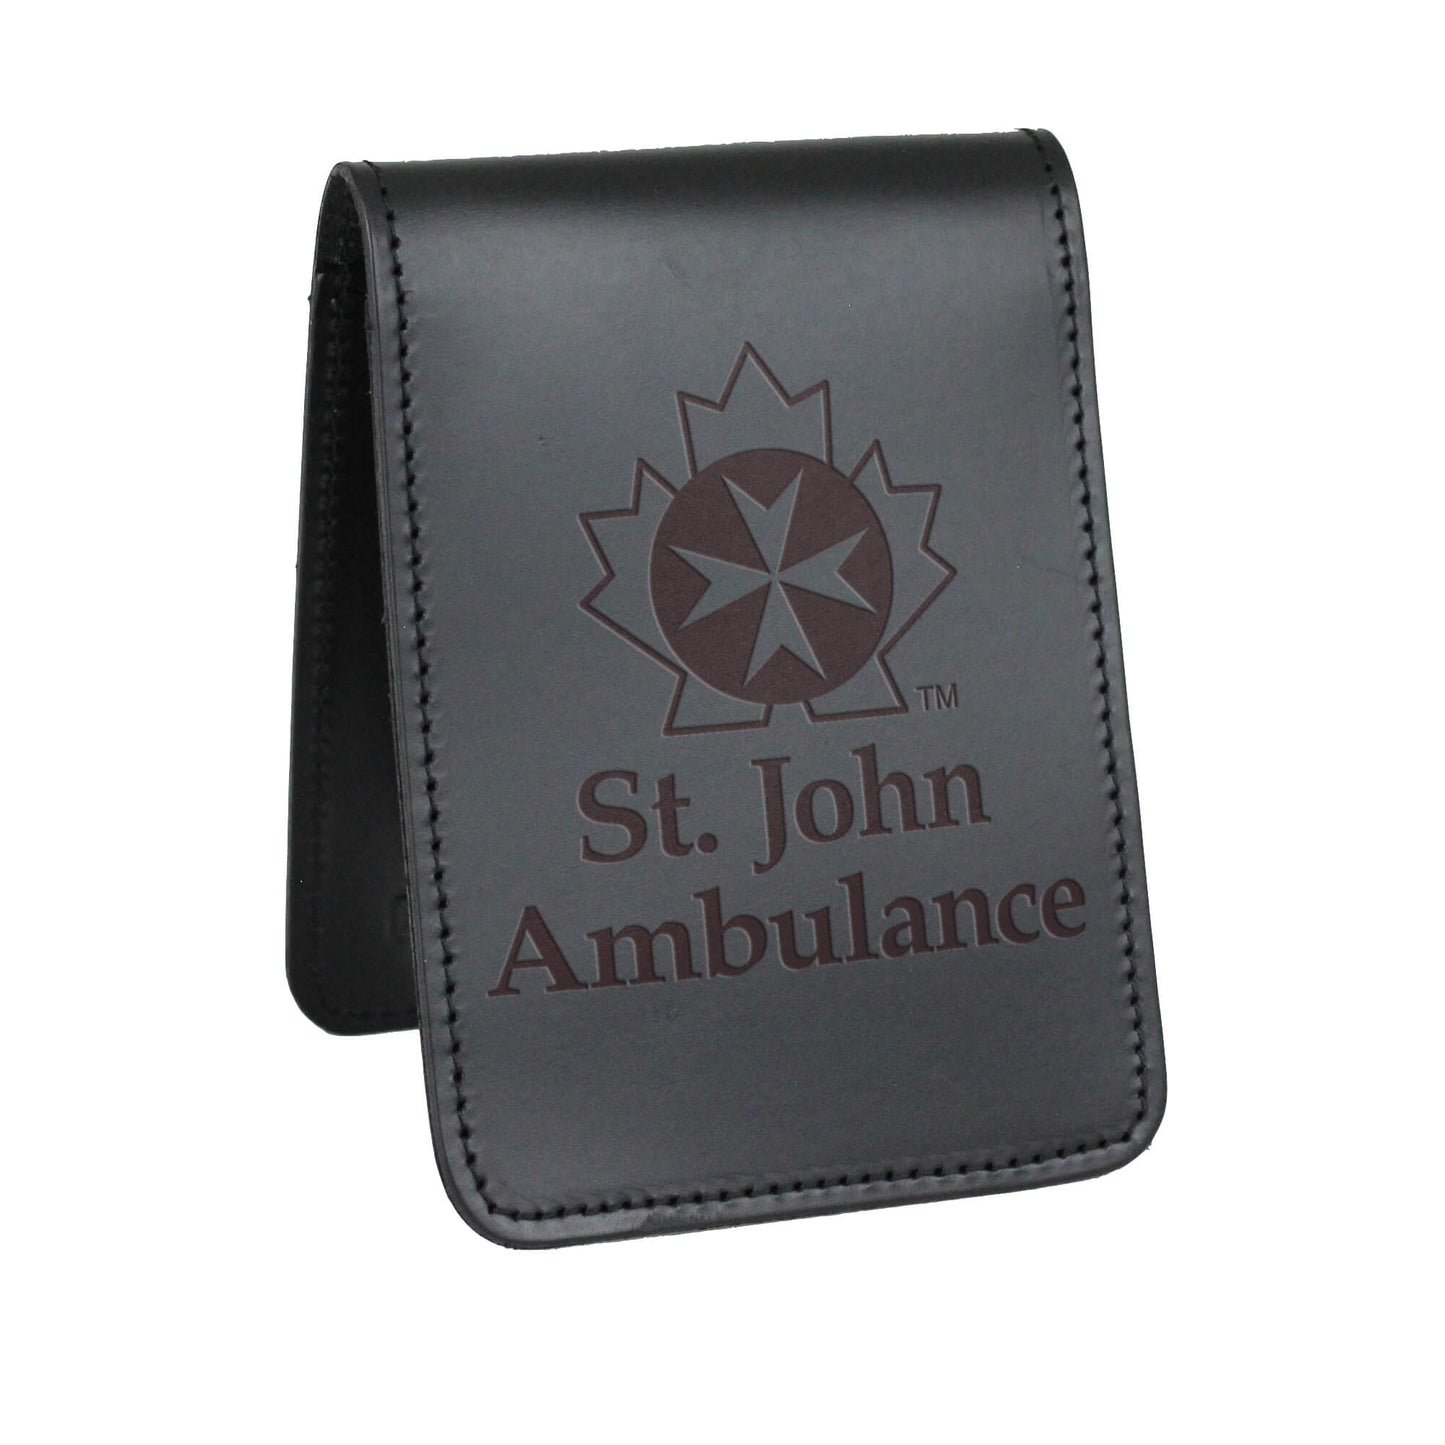 St. John Ambulance Notebook Cover